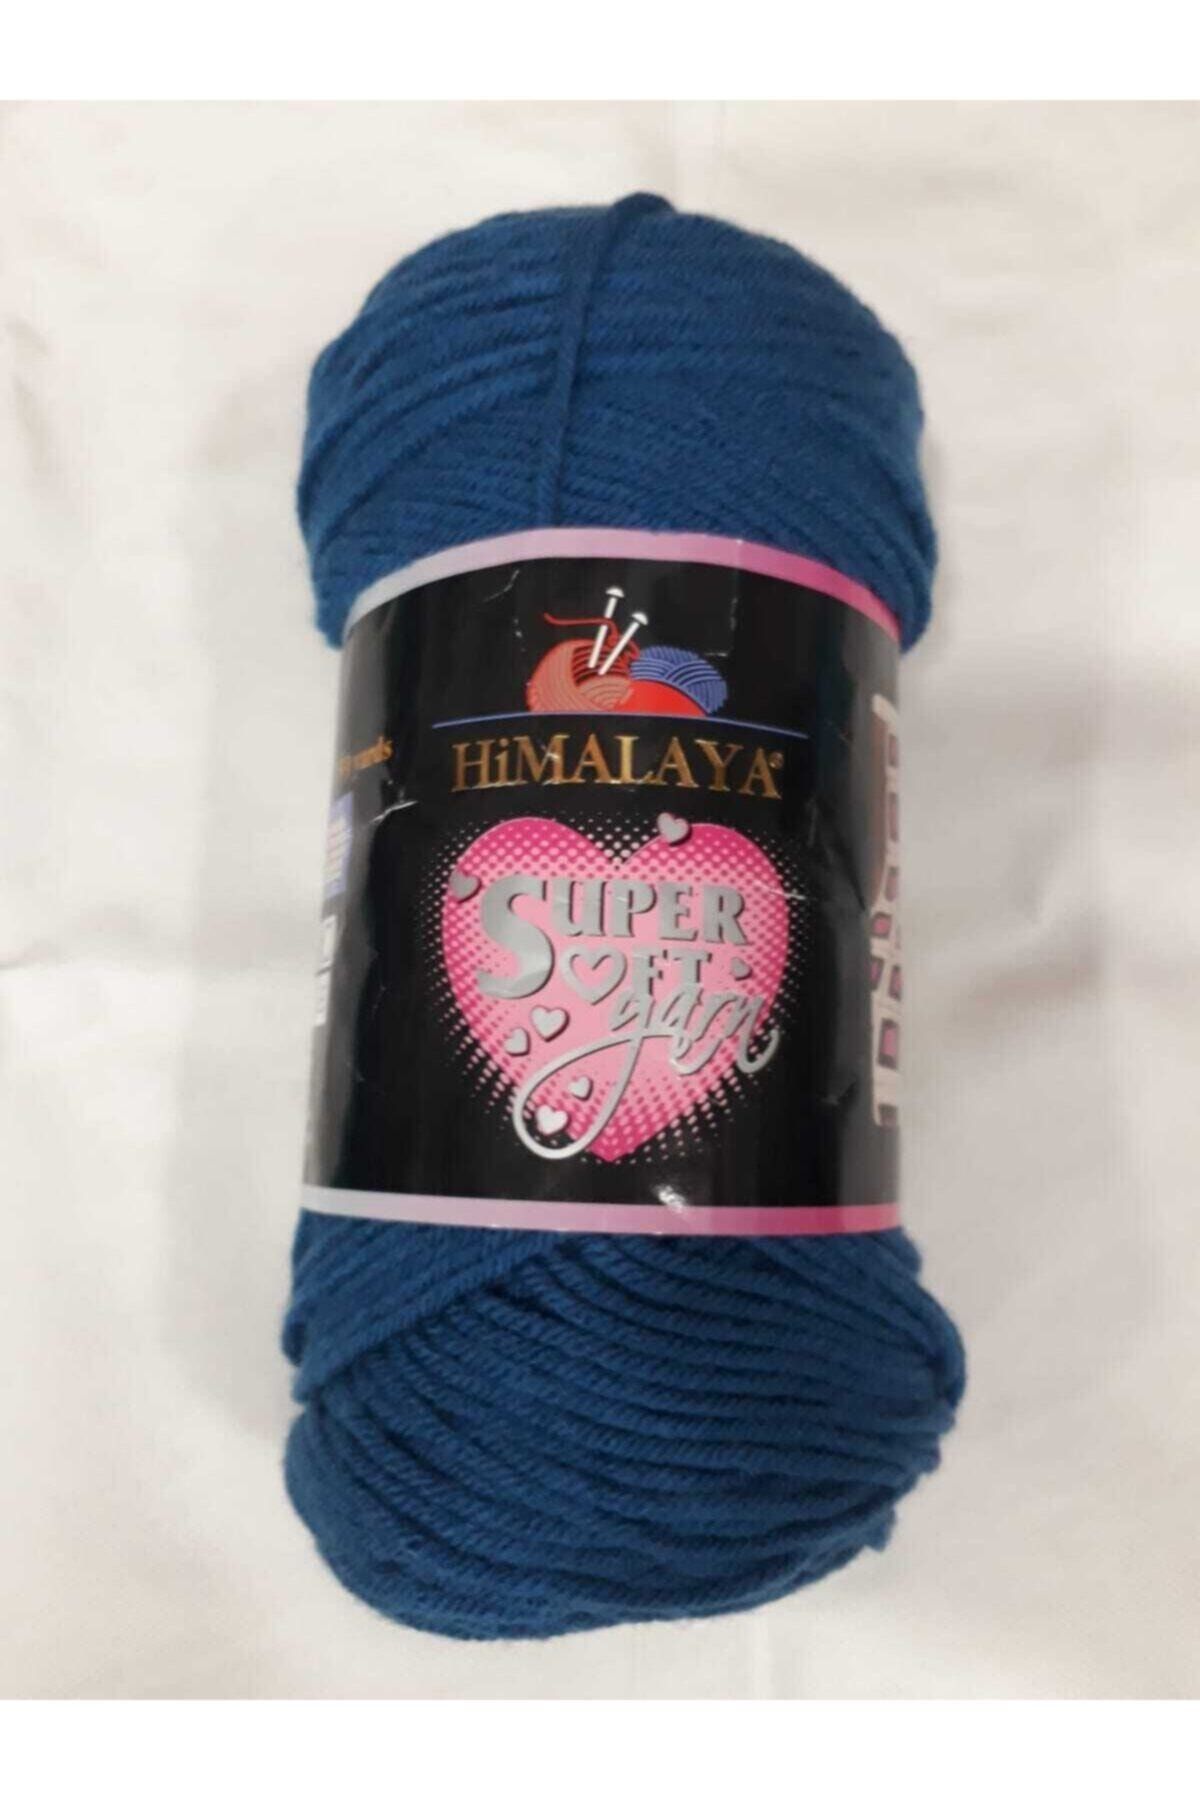 Himalaya Süper Soft Yarn 5'li Paket Tanesi 200g-renk 80844